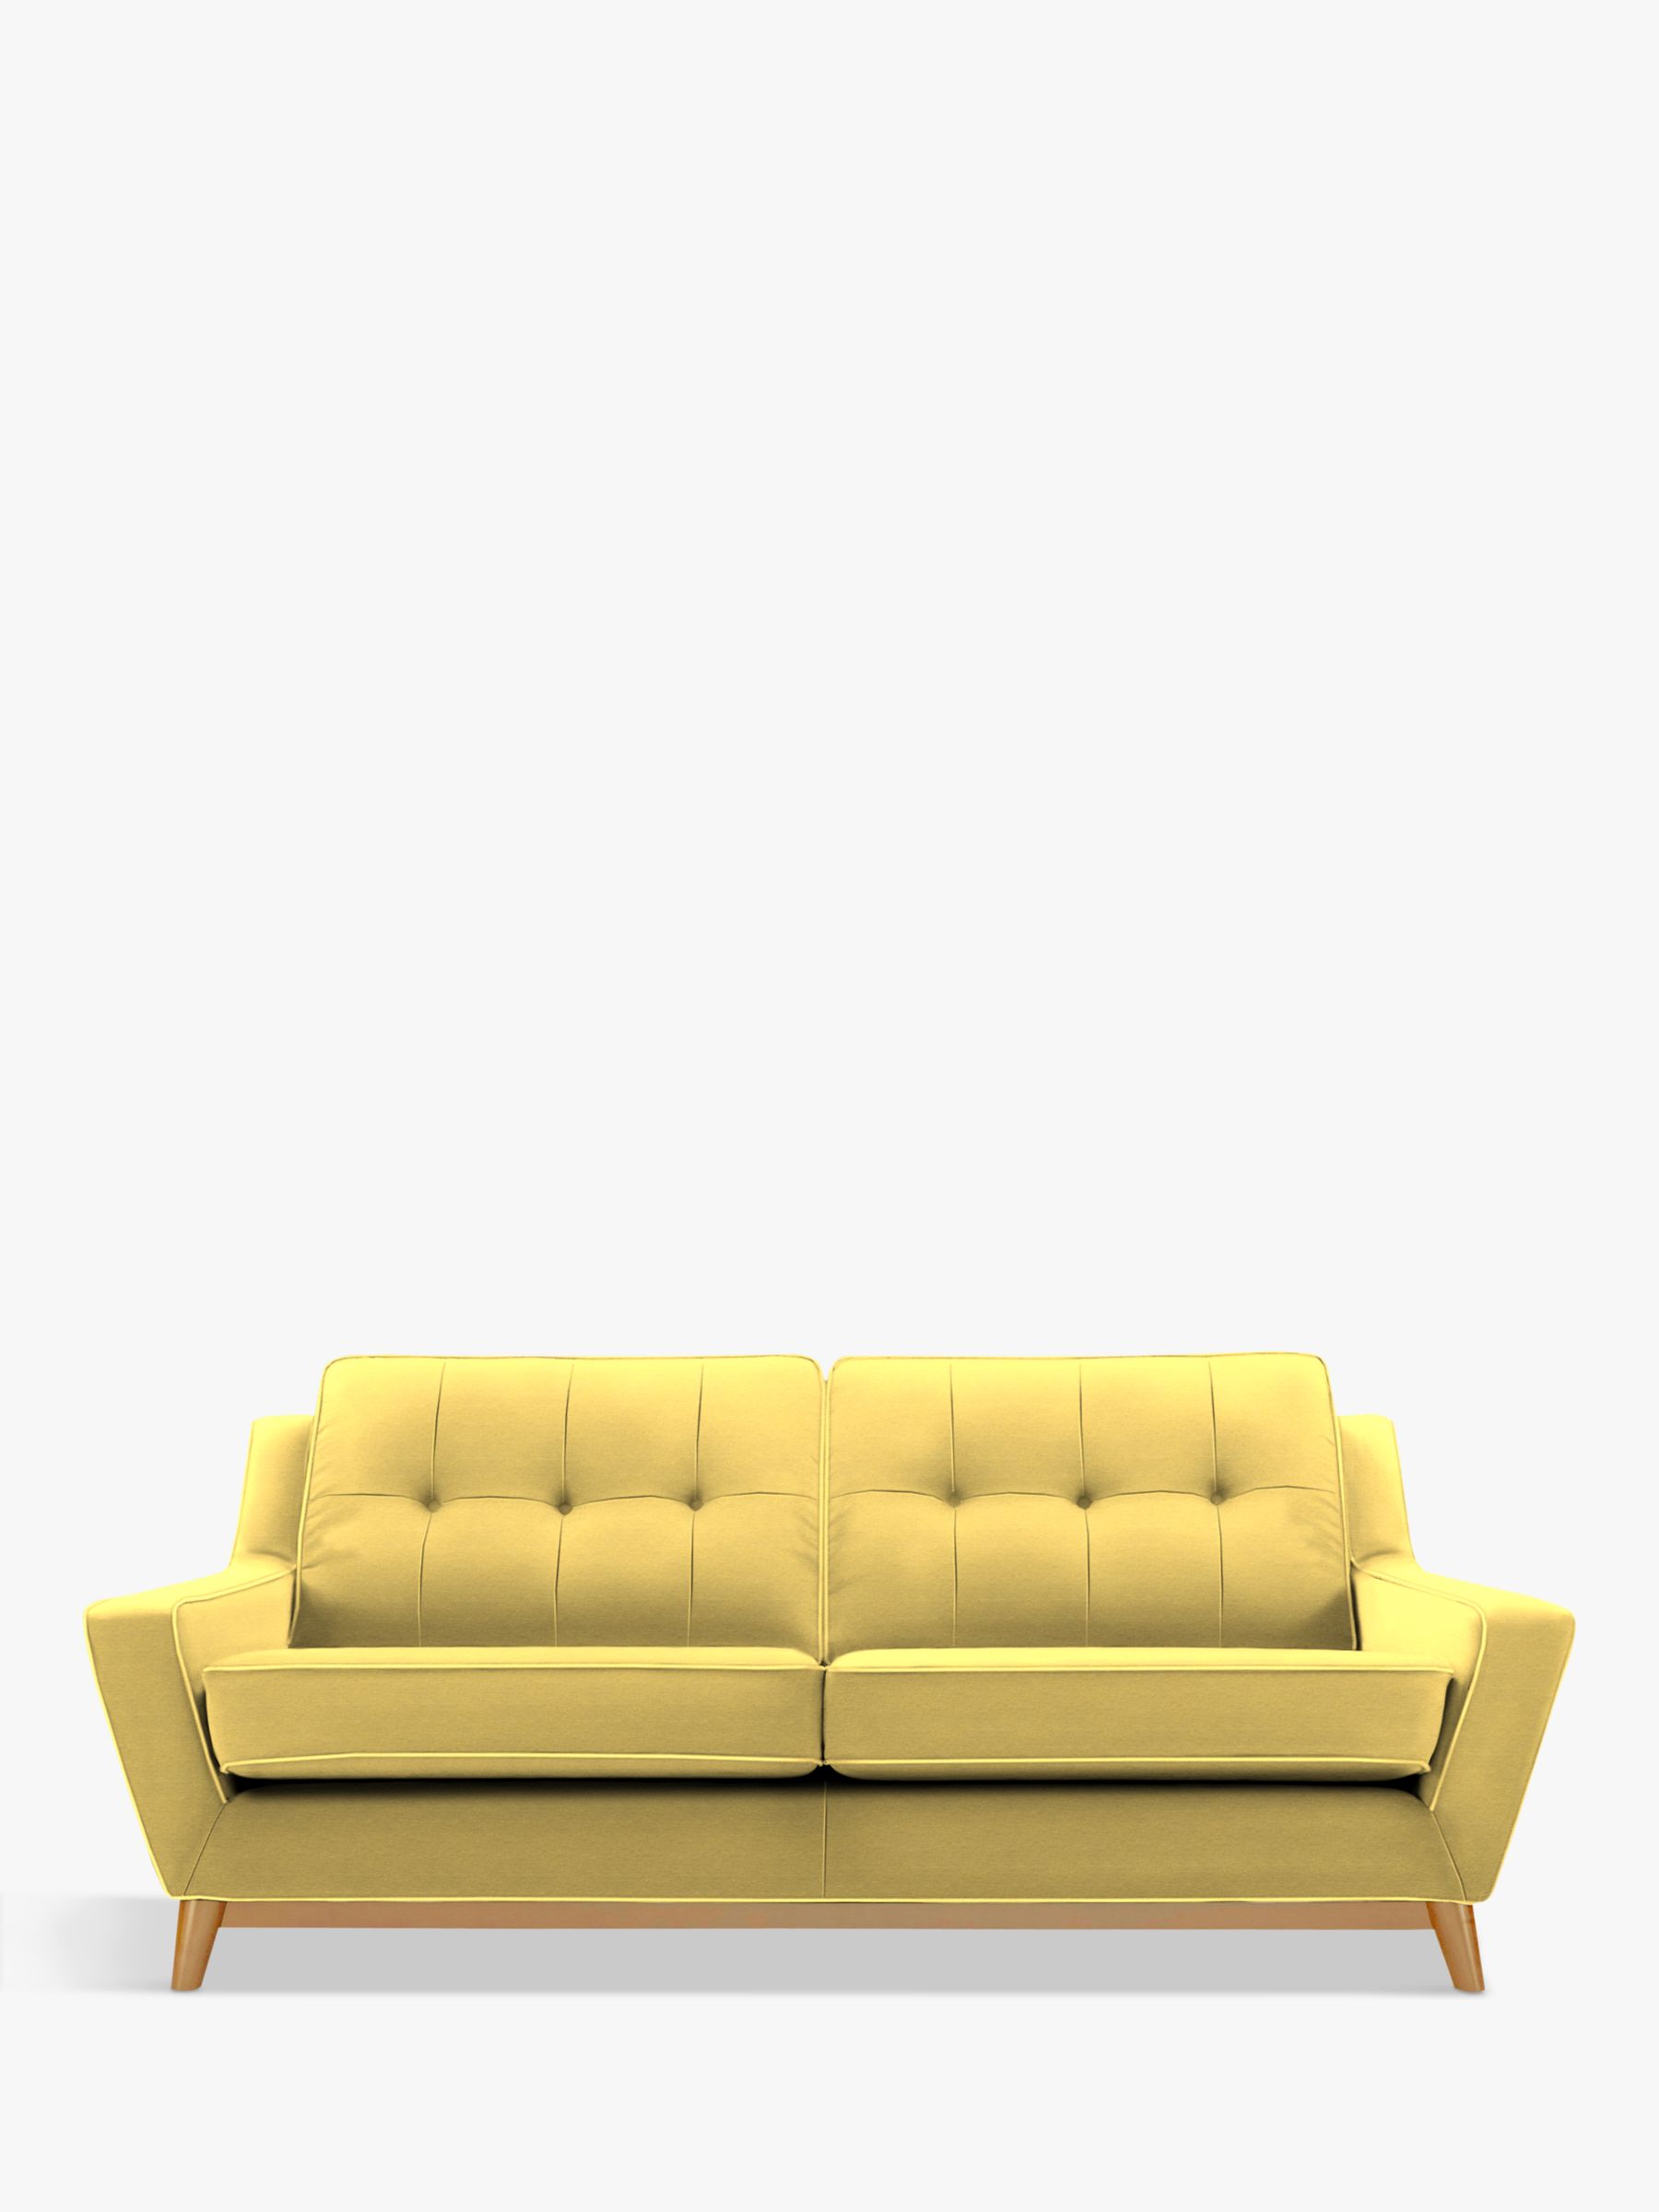 G Plan Vintage The Fifty Three Large Sofa, Tonic Mustard, width 199cm